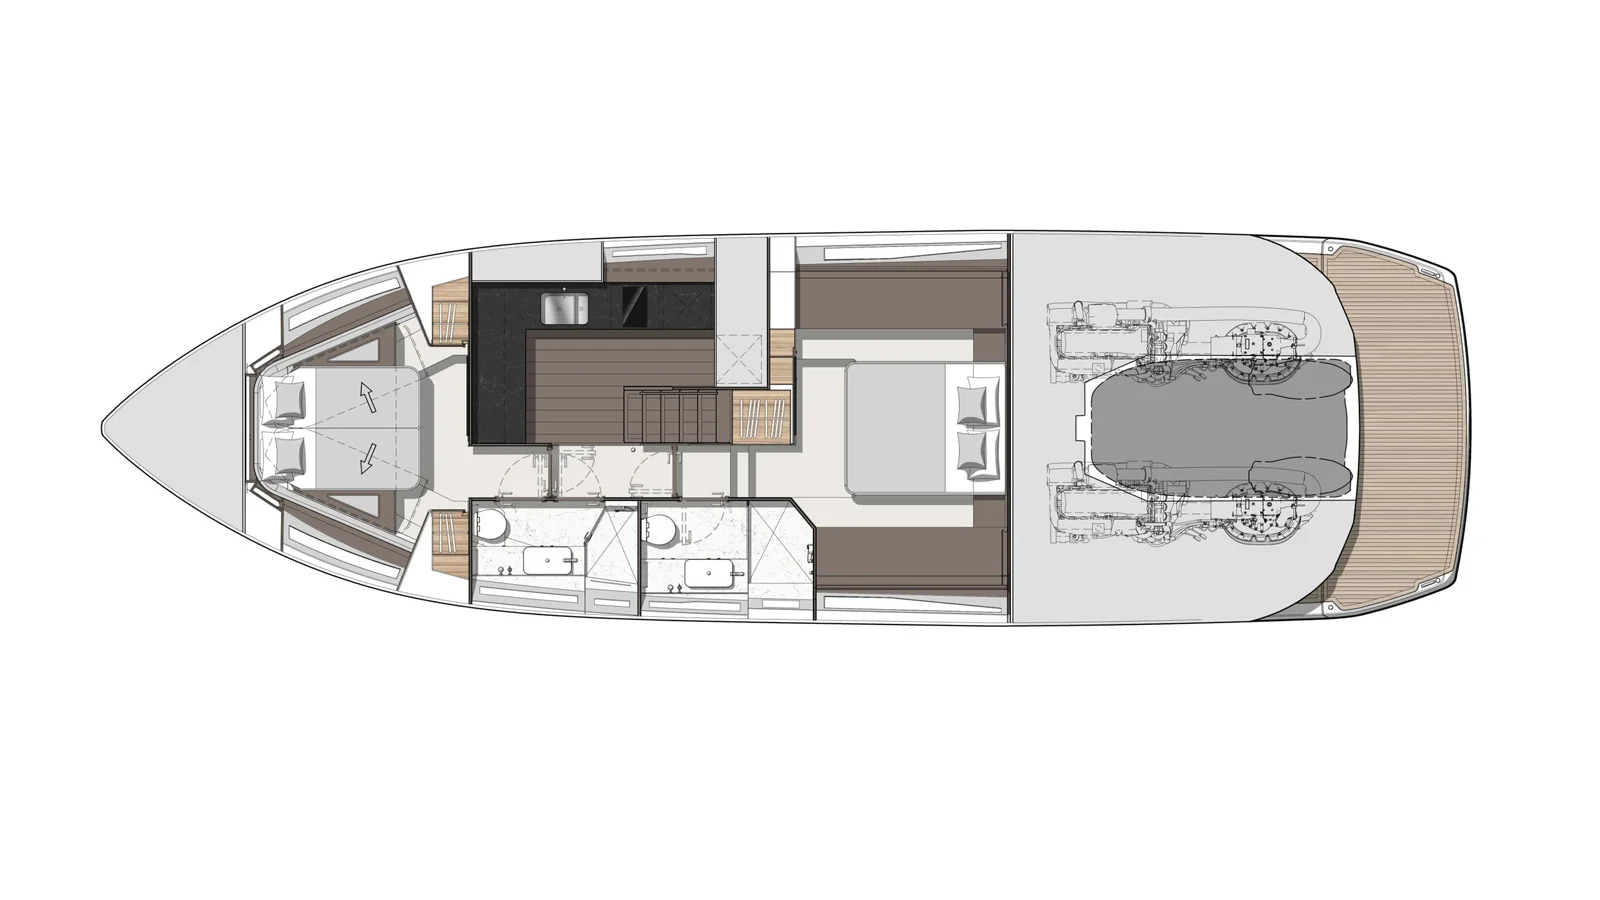 Lower deck galley option